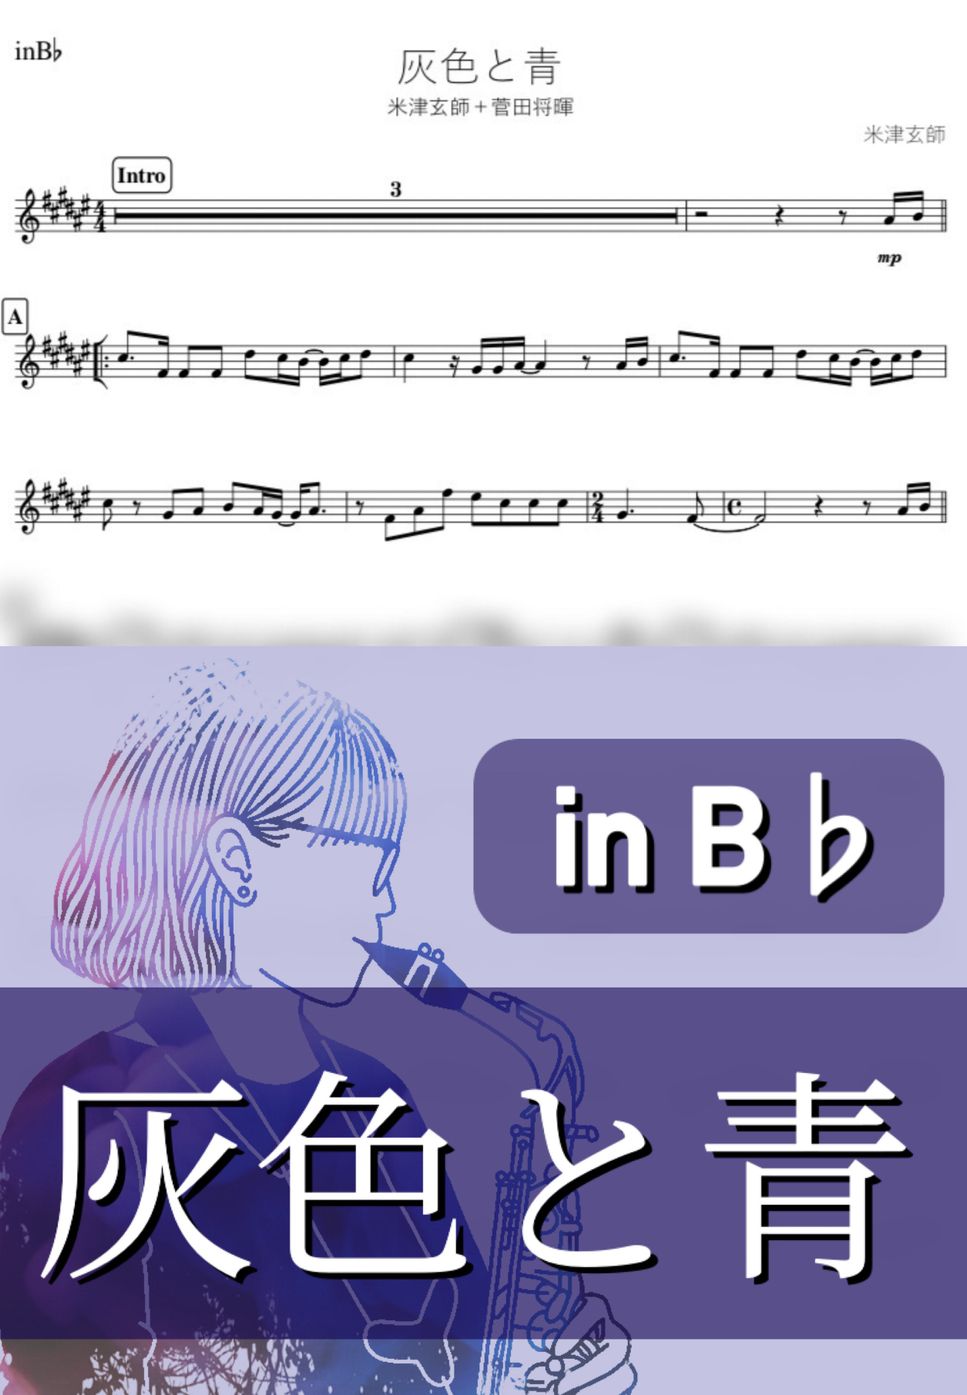 米津玄師×菅田将暉 - 灰色と青 (B♭) by kanamusic